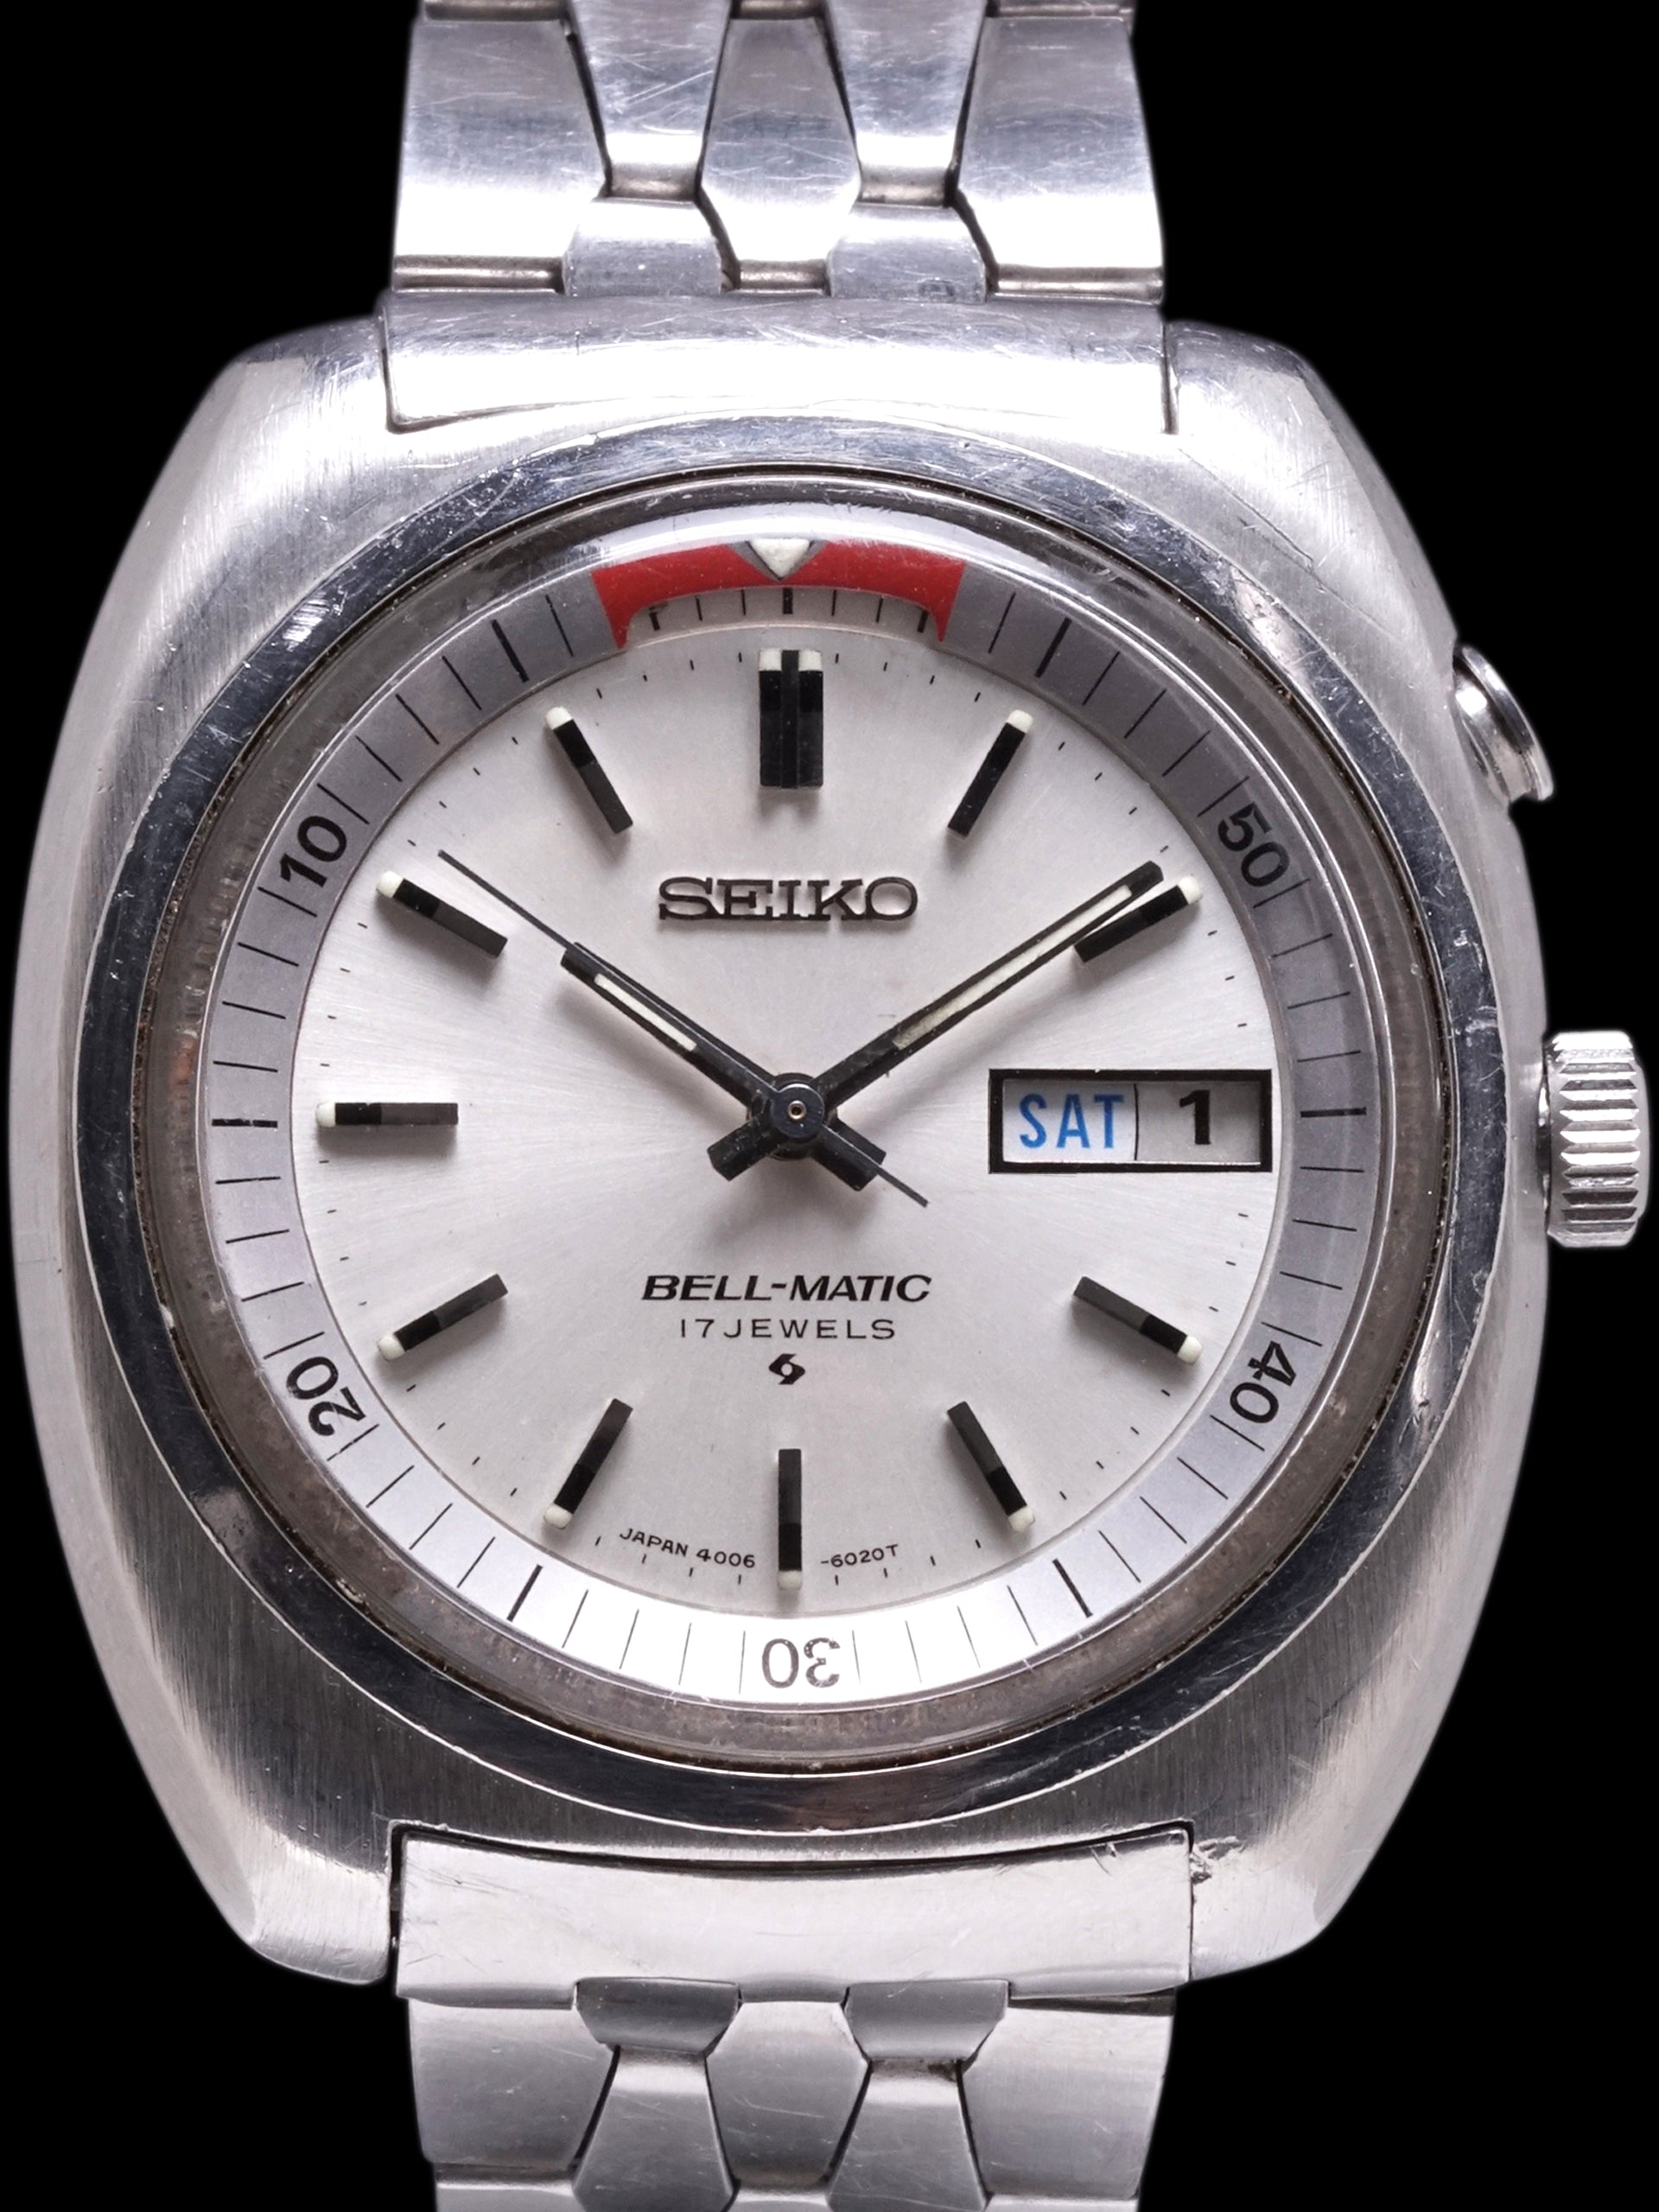 1971 Seiko Bell-Matic Alarm (Ref. 4006-6039)